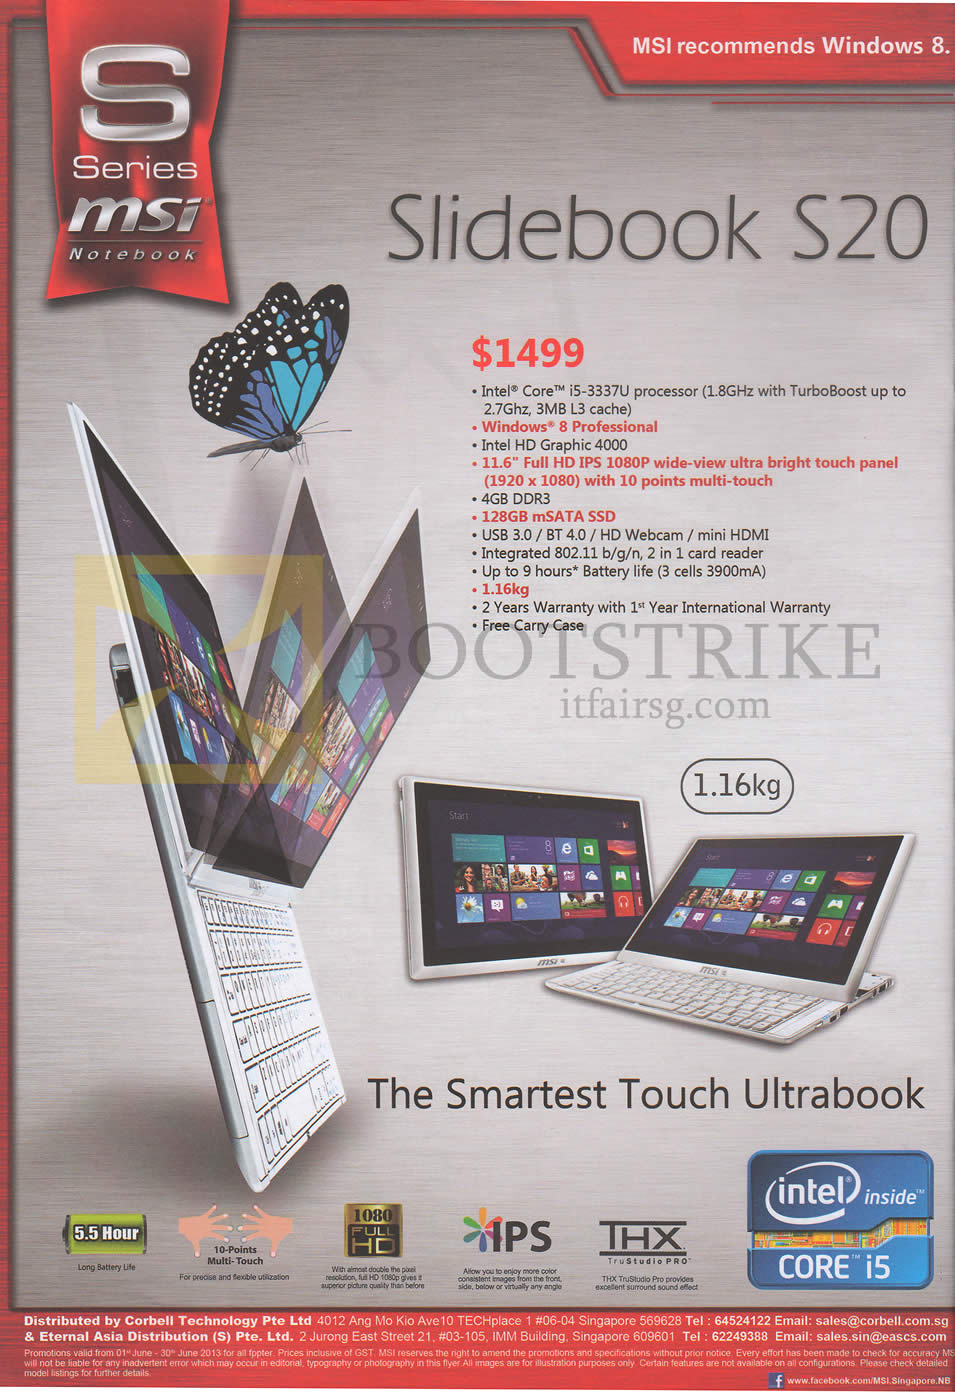 PC SHOW 2013 price list image brochure of MSI Notebook Slidebook S20